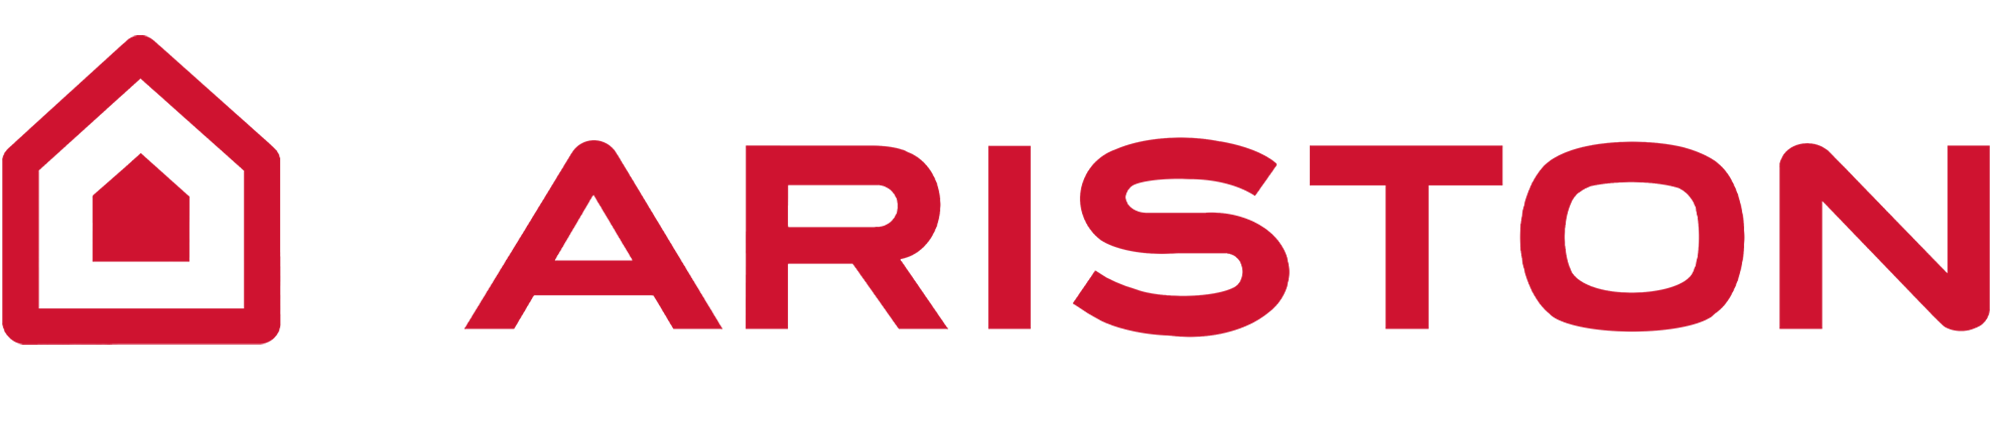 Ariston Thermo Group logo. Аристон котлы логотип. Ariston котел лого. Арис лого. Ariston фирма